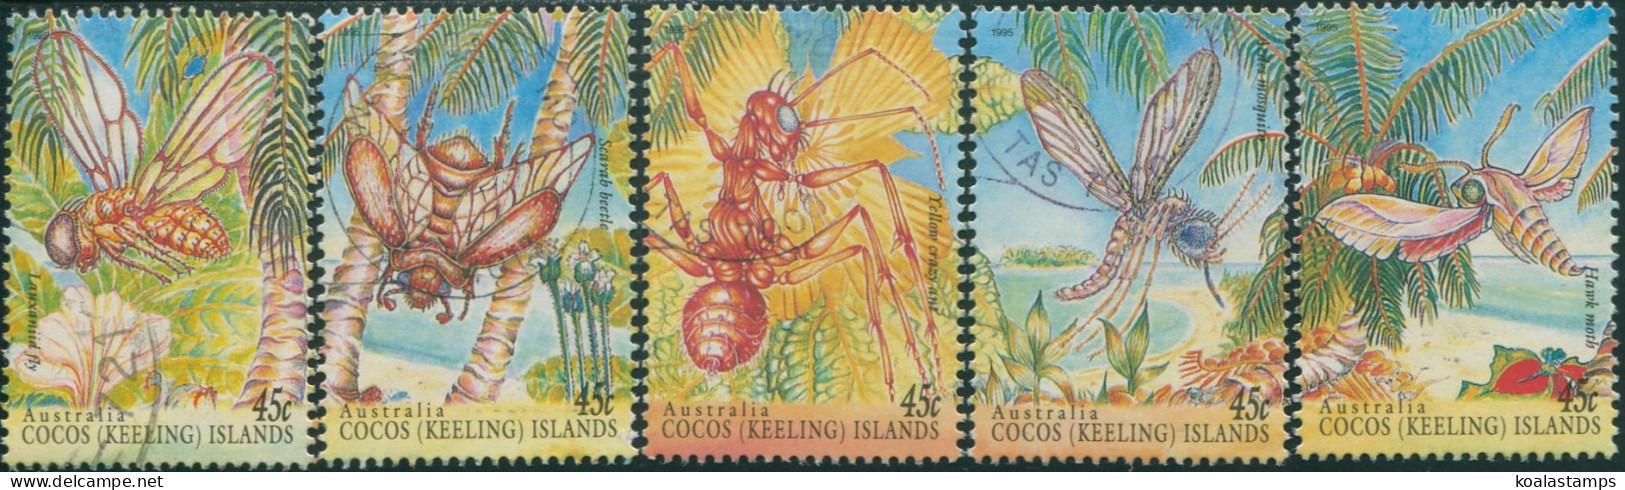 Cocos Islands 1994 SG326 Insects Part Set FU - Kokosinseln (Keeling Islands)